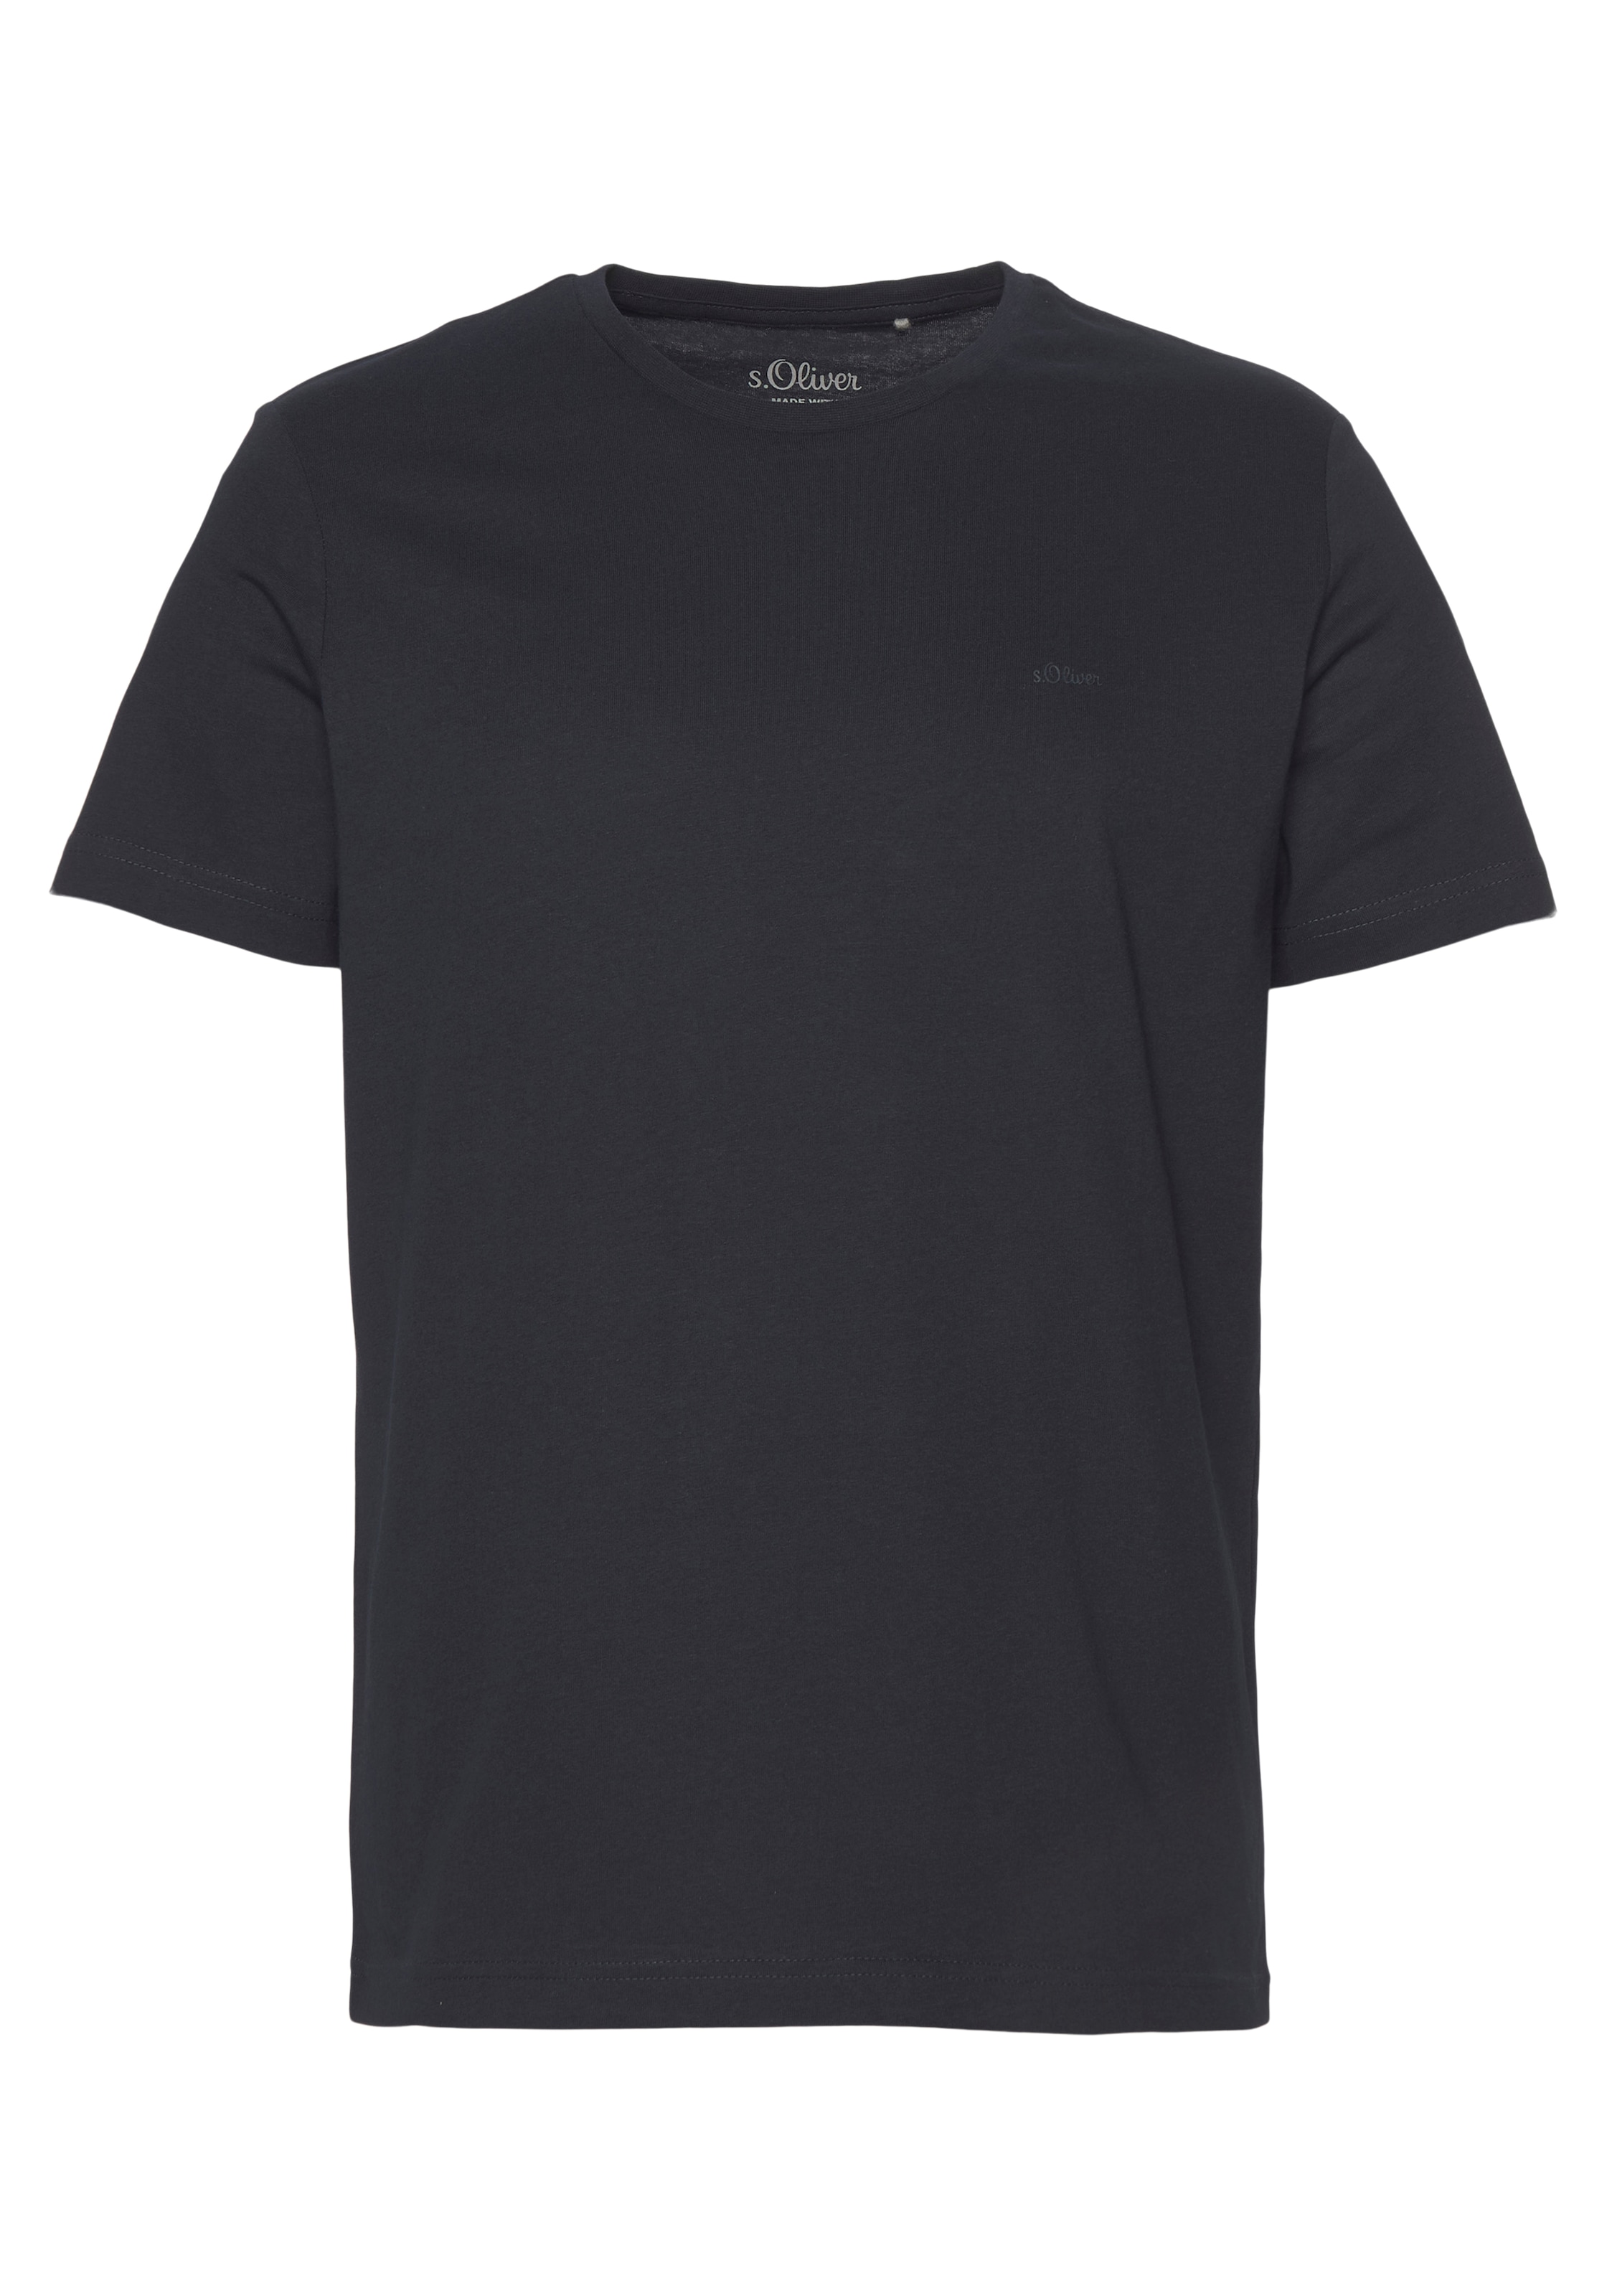 OTTO online bei gut kombinierbar T-Shirt, s.Oliver shoppen